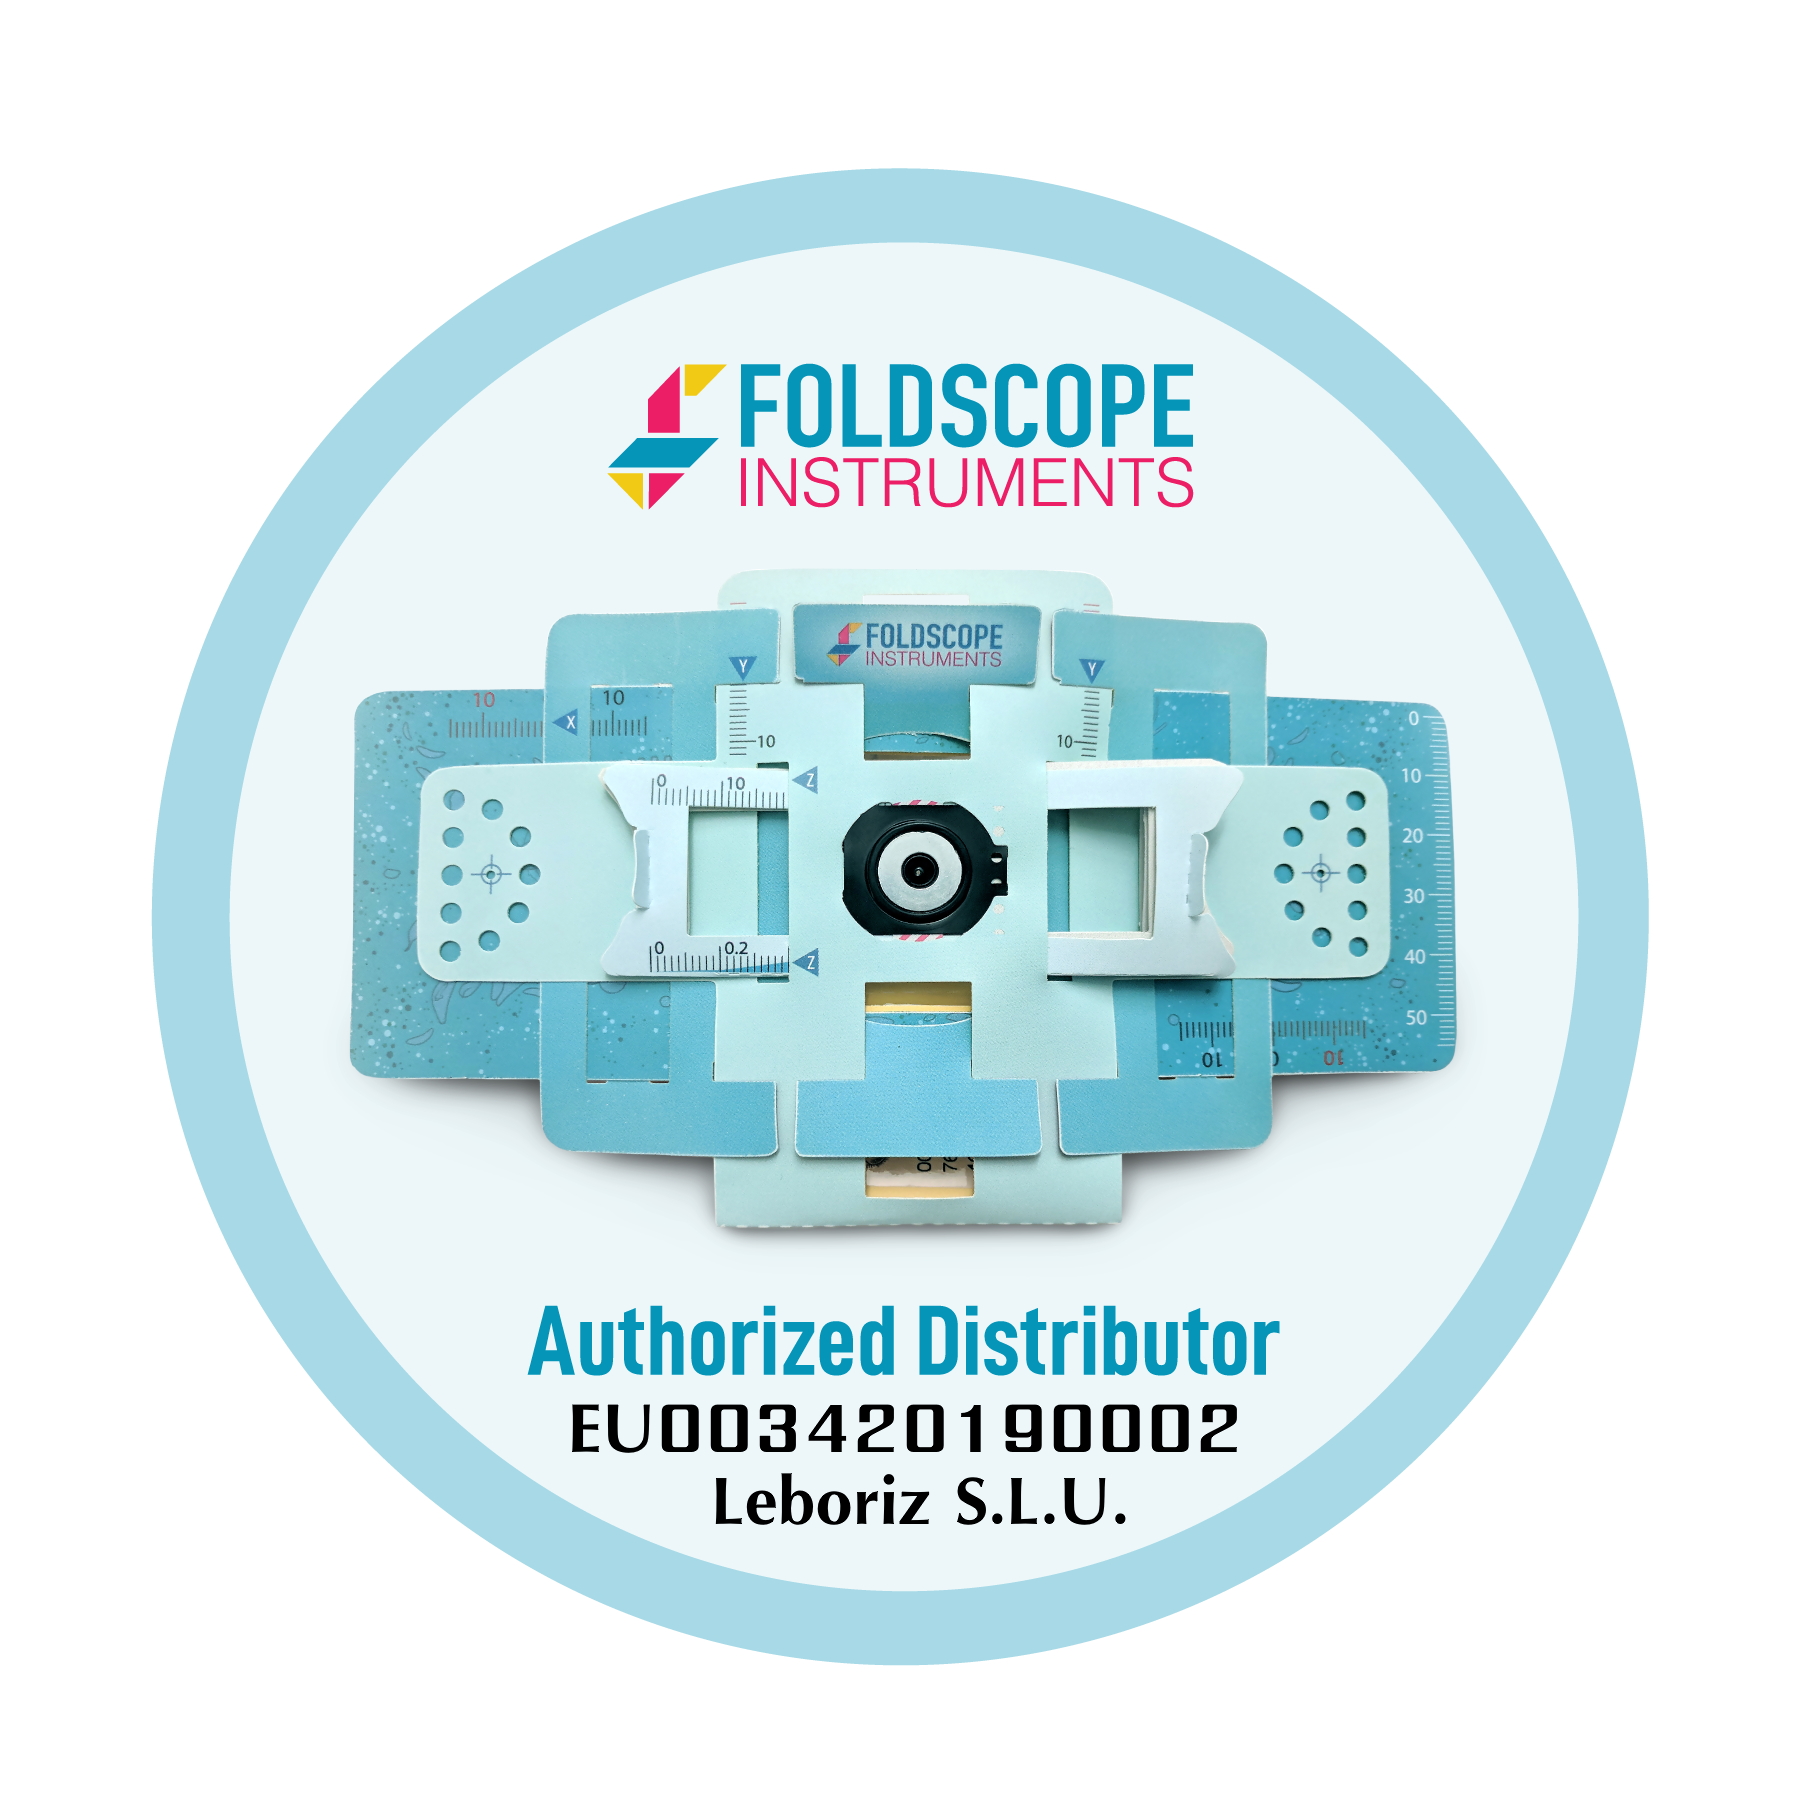 Foldscope Deluxe Individual & Basic Classroom Kit.